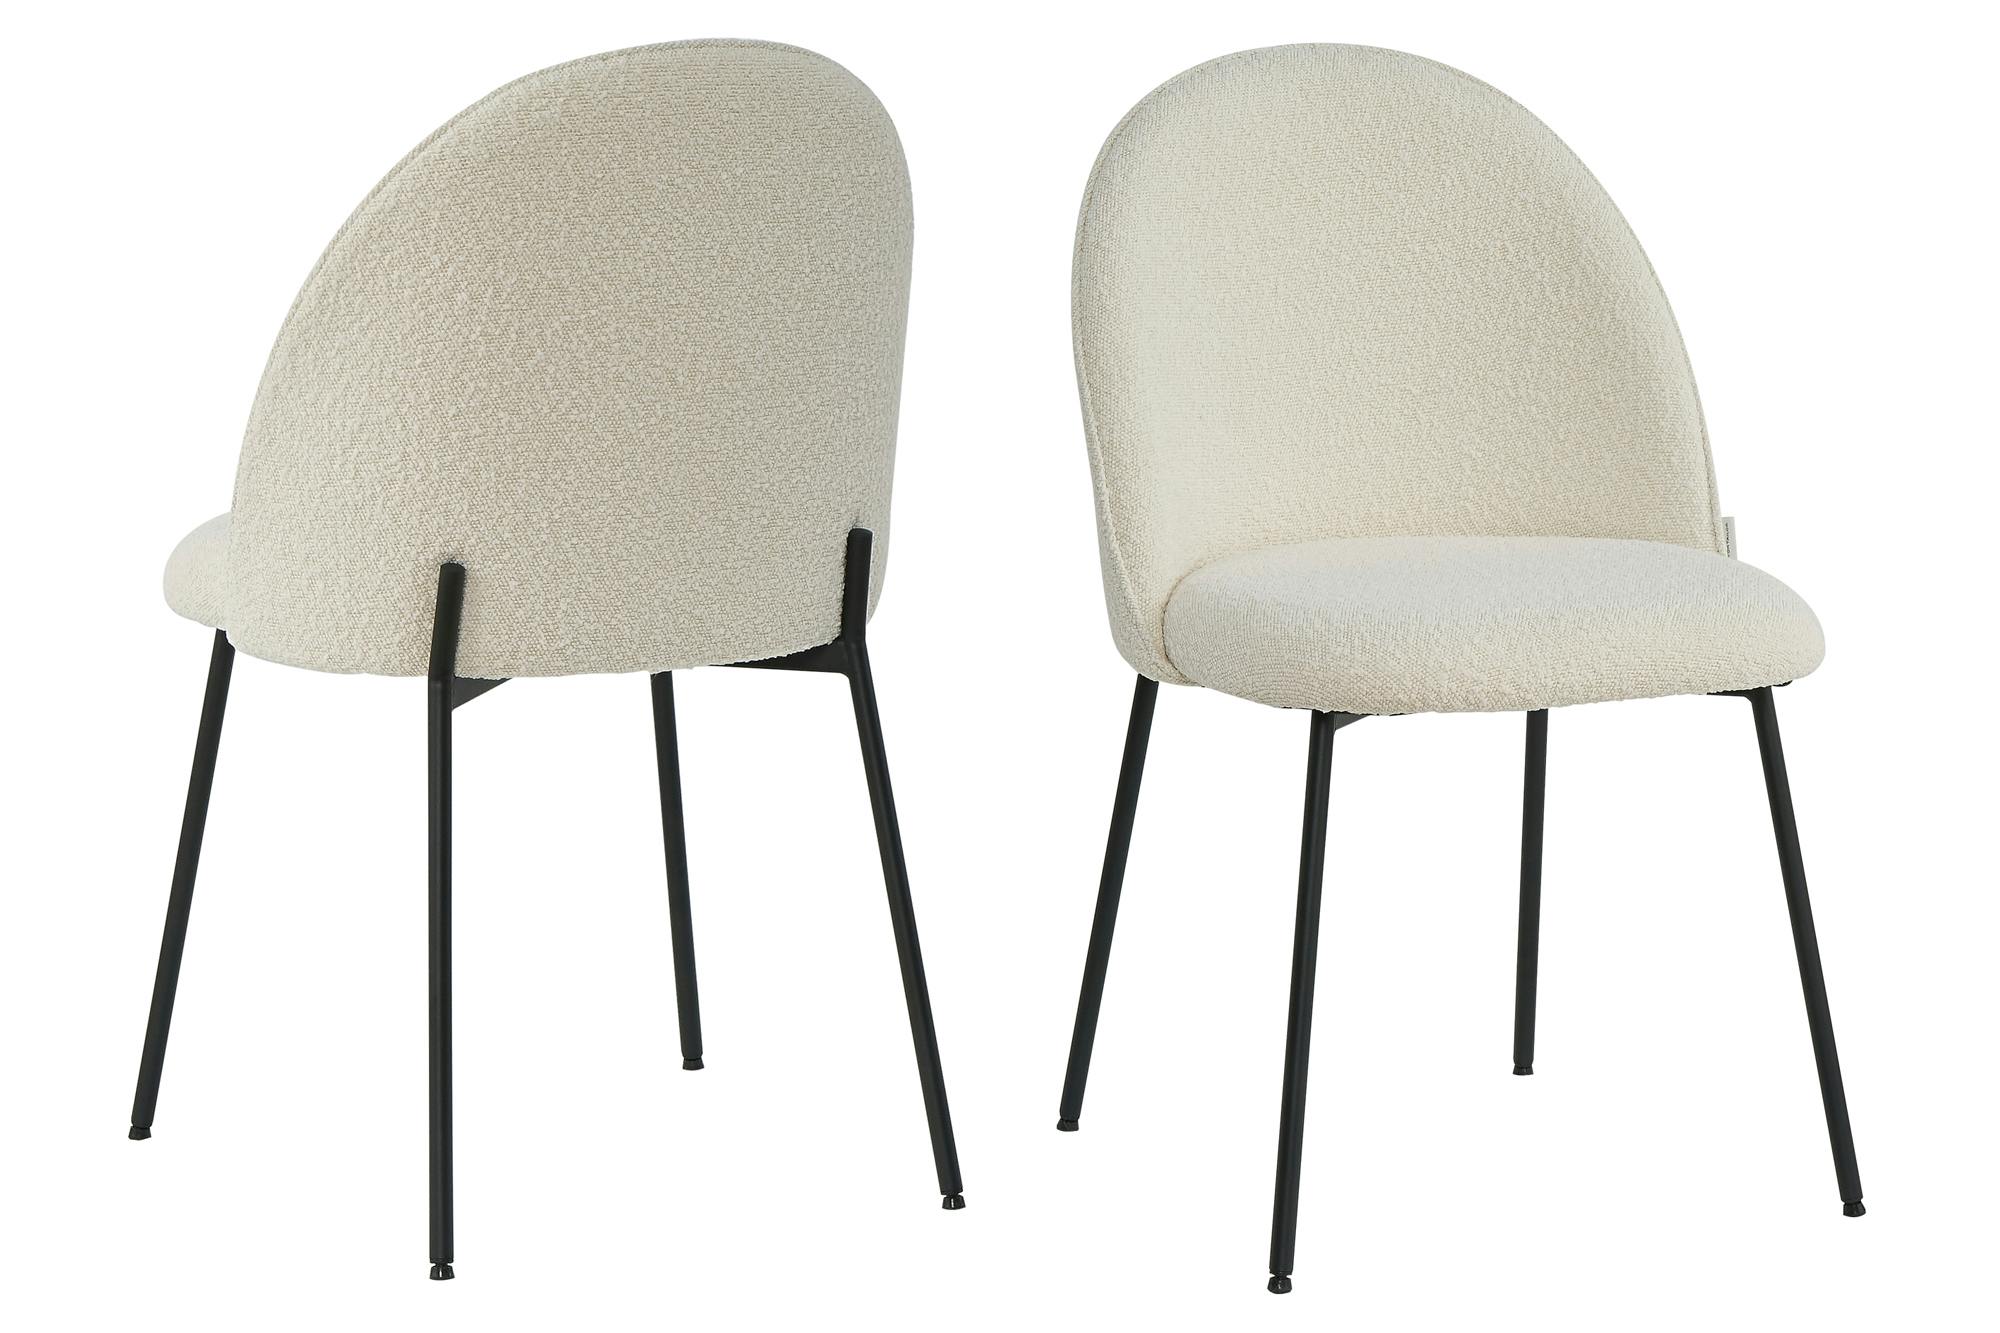 T-Bouclé SIT&CHAIRS | |02412-03 2er-Set Möbel SIT Beine METRO Pad Marktplatz Tailor Metall Chair | | |Serie B57xT54xH52cm beige| gepolstert | Stuhl schwarz Tom